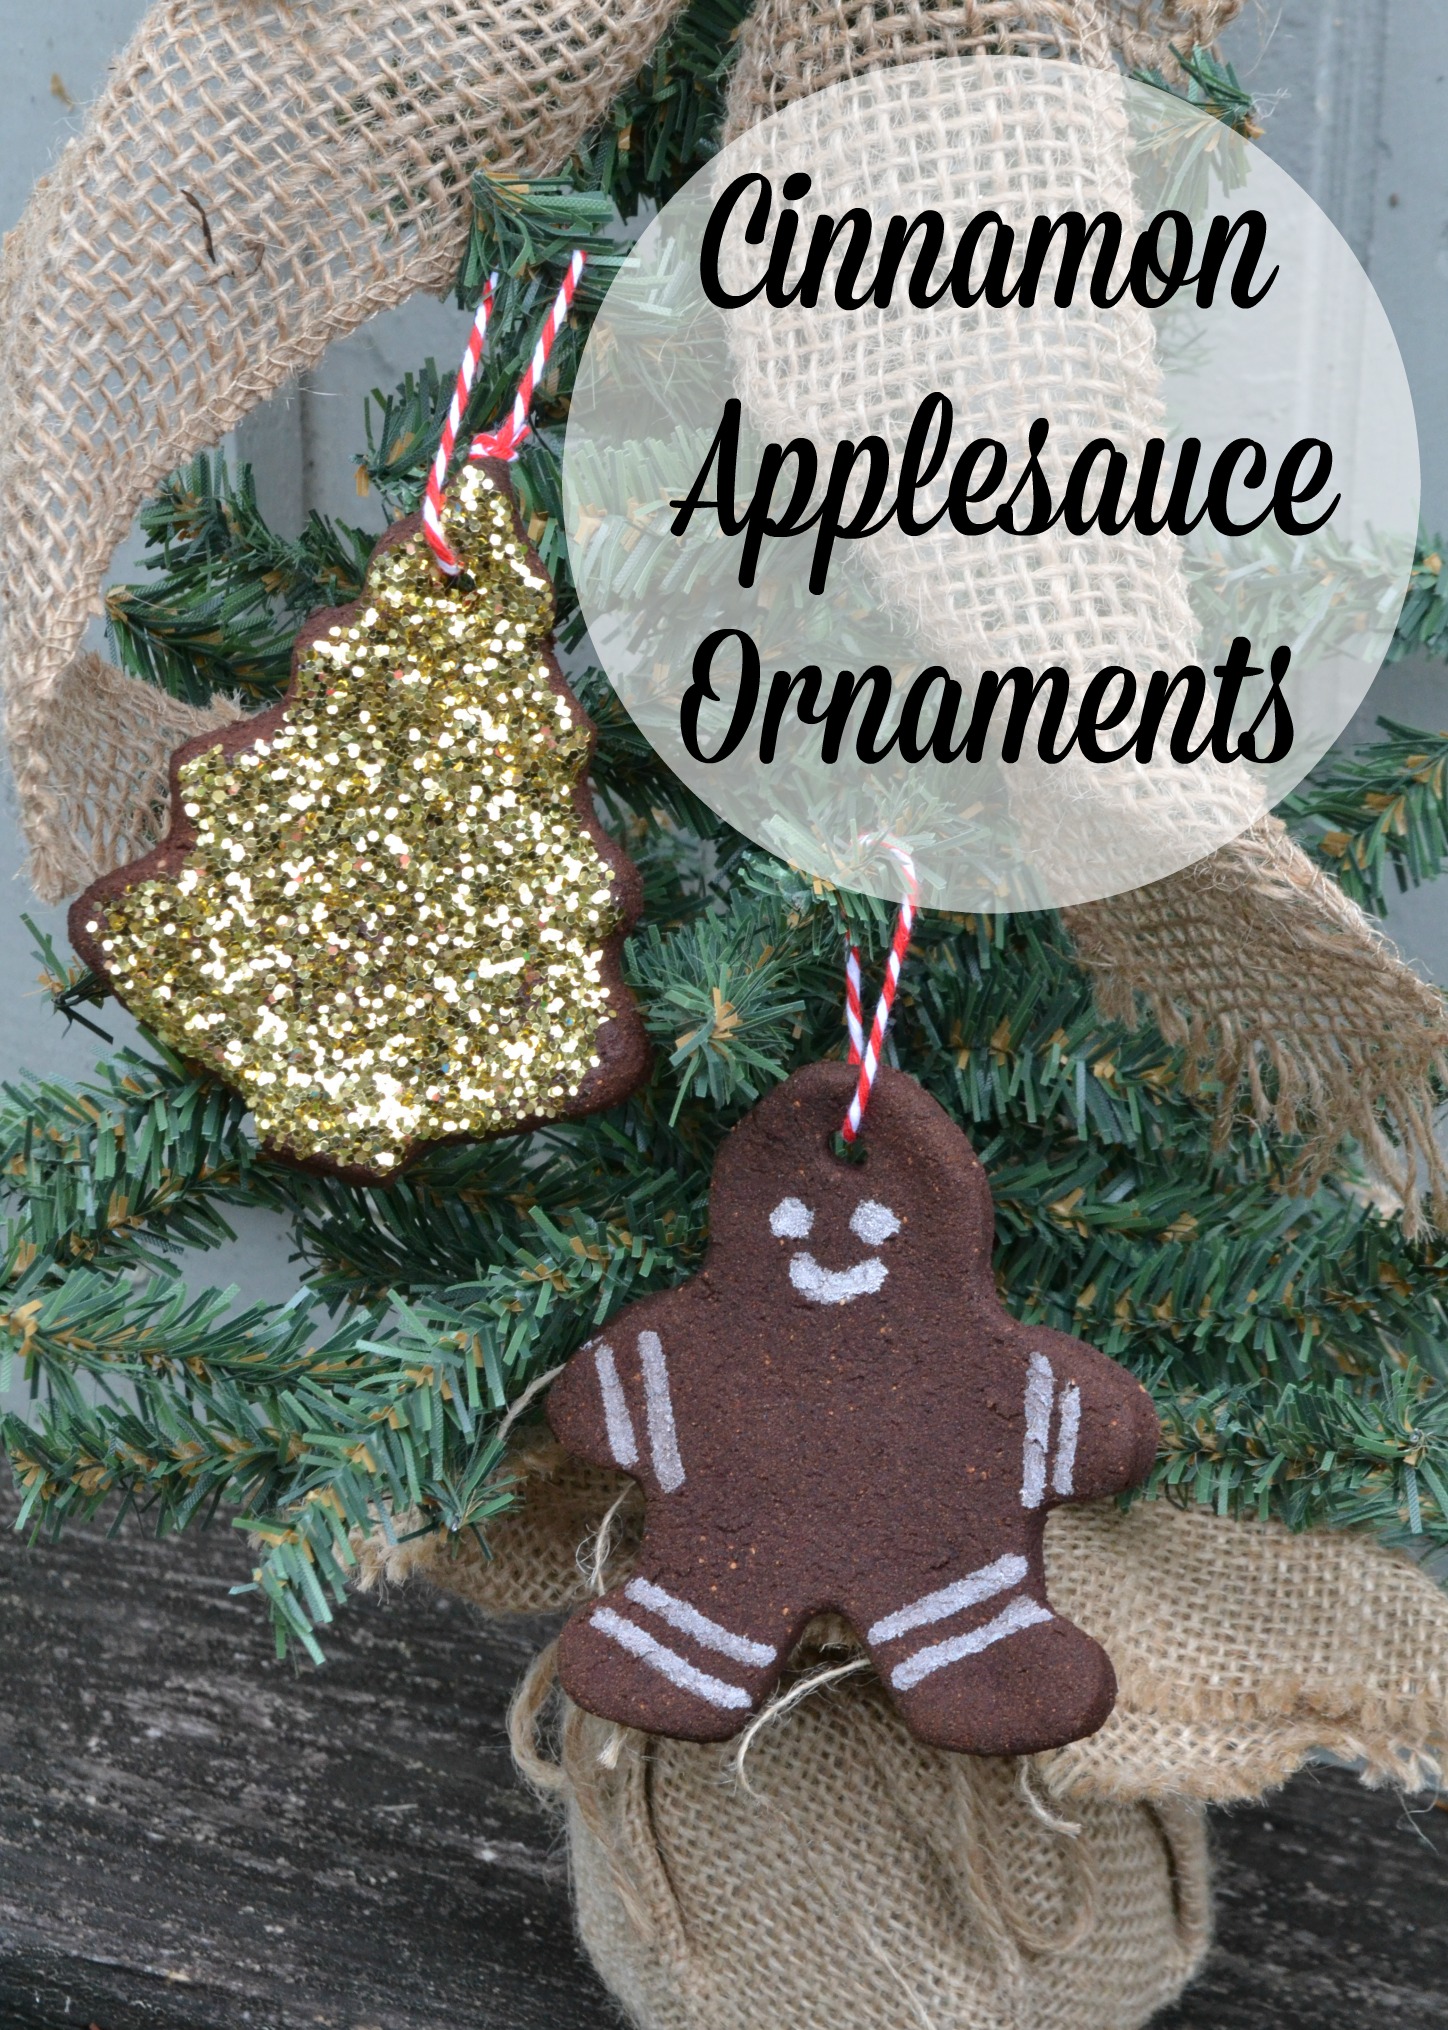 Cinnamon Applesauce Ornaments